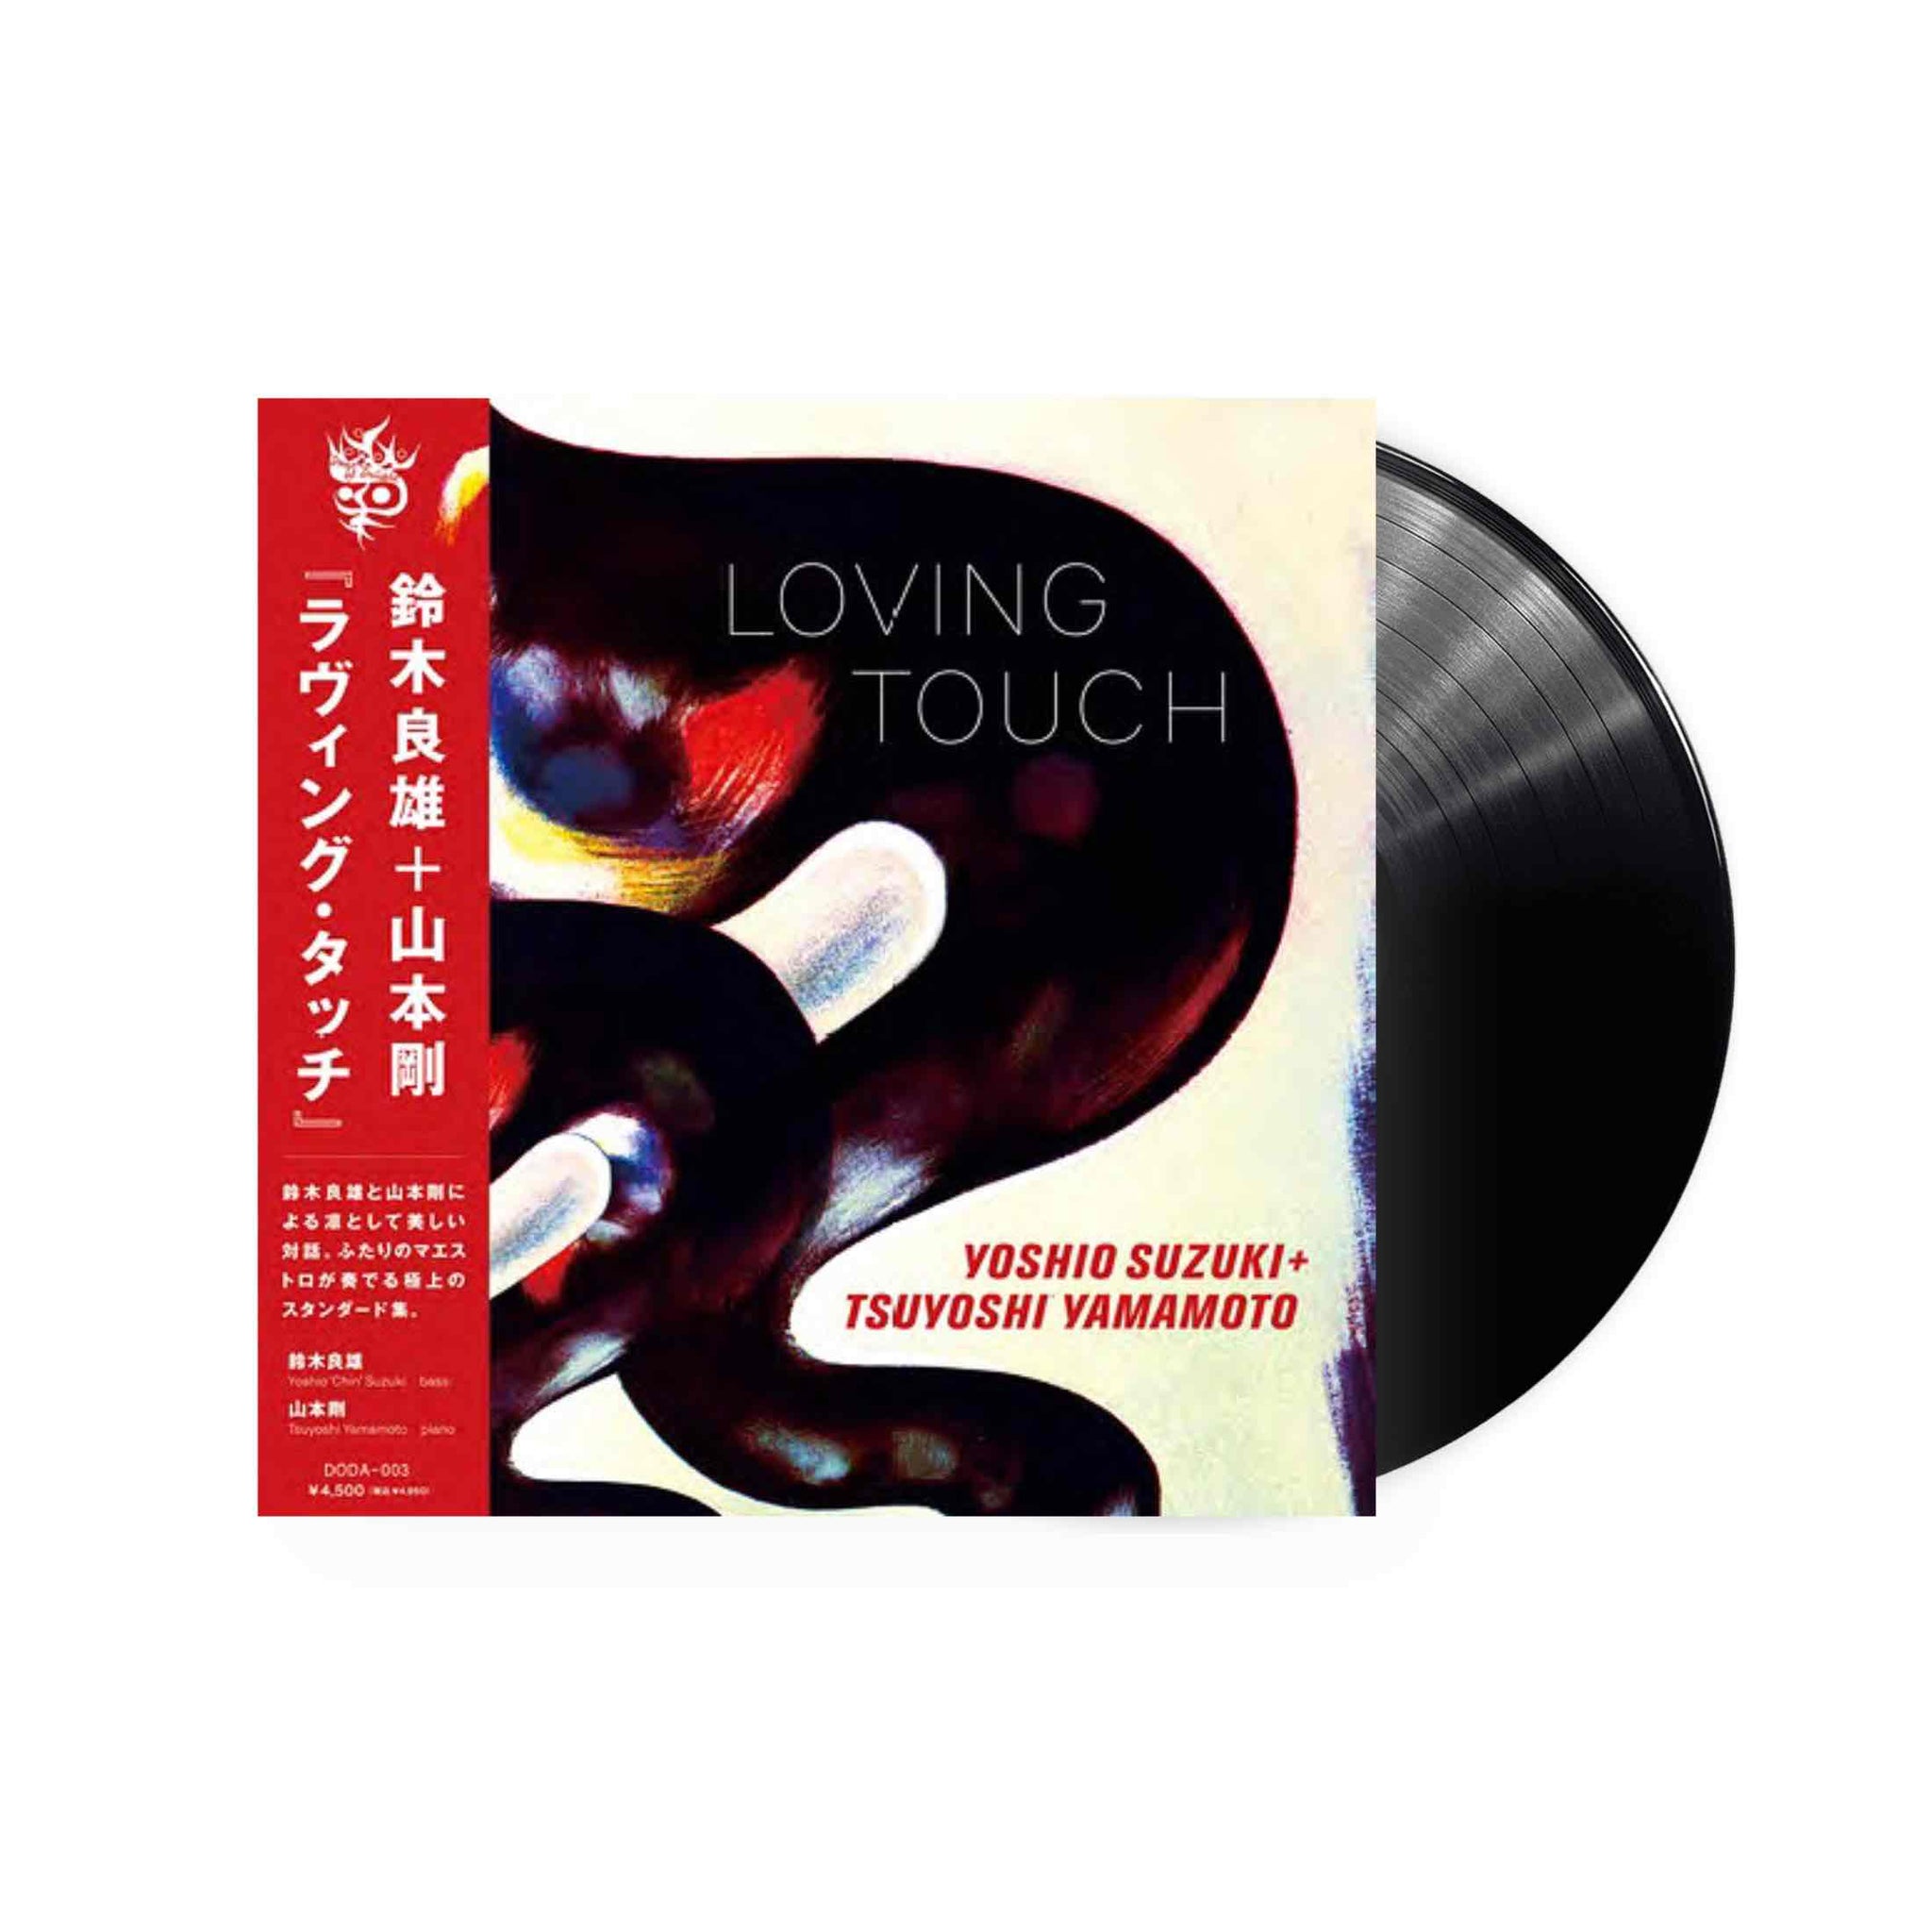 Yoshio Suzuki + Tsuyoshi Yamamoto - Loving Touch LP (Black Vinyl)